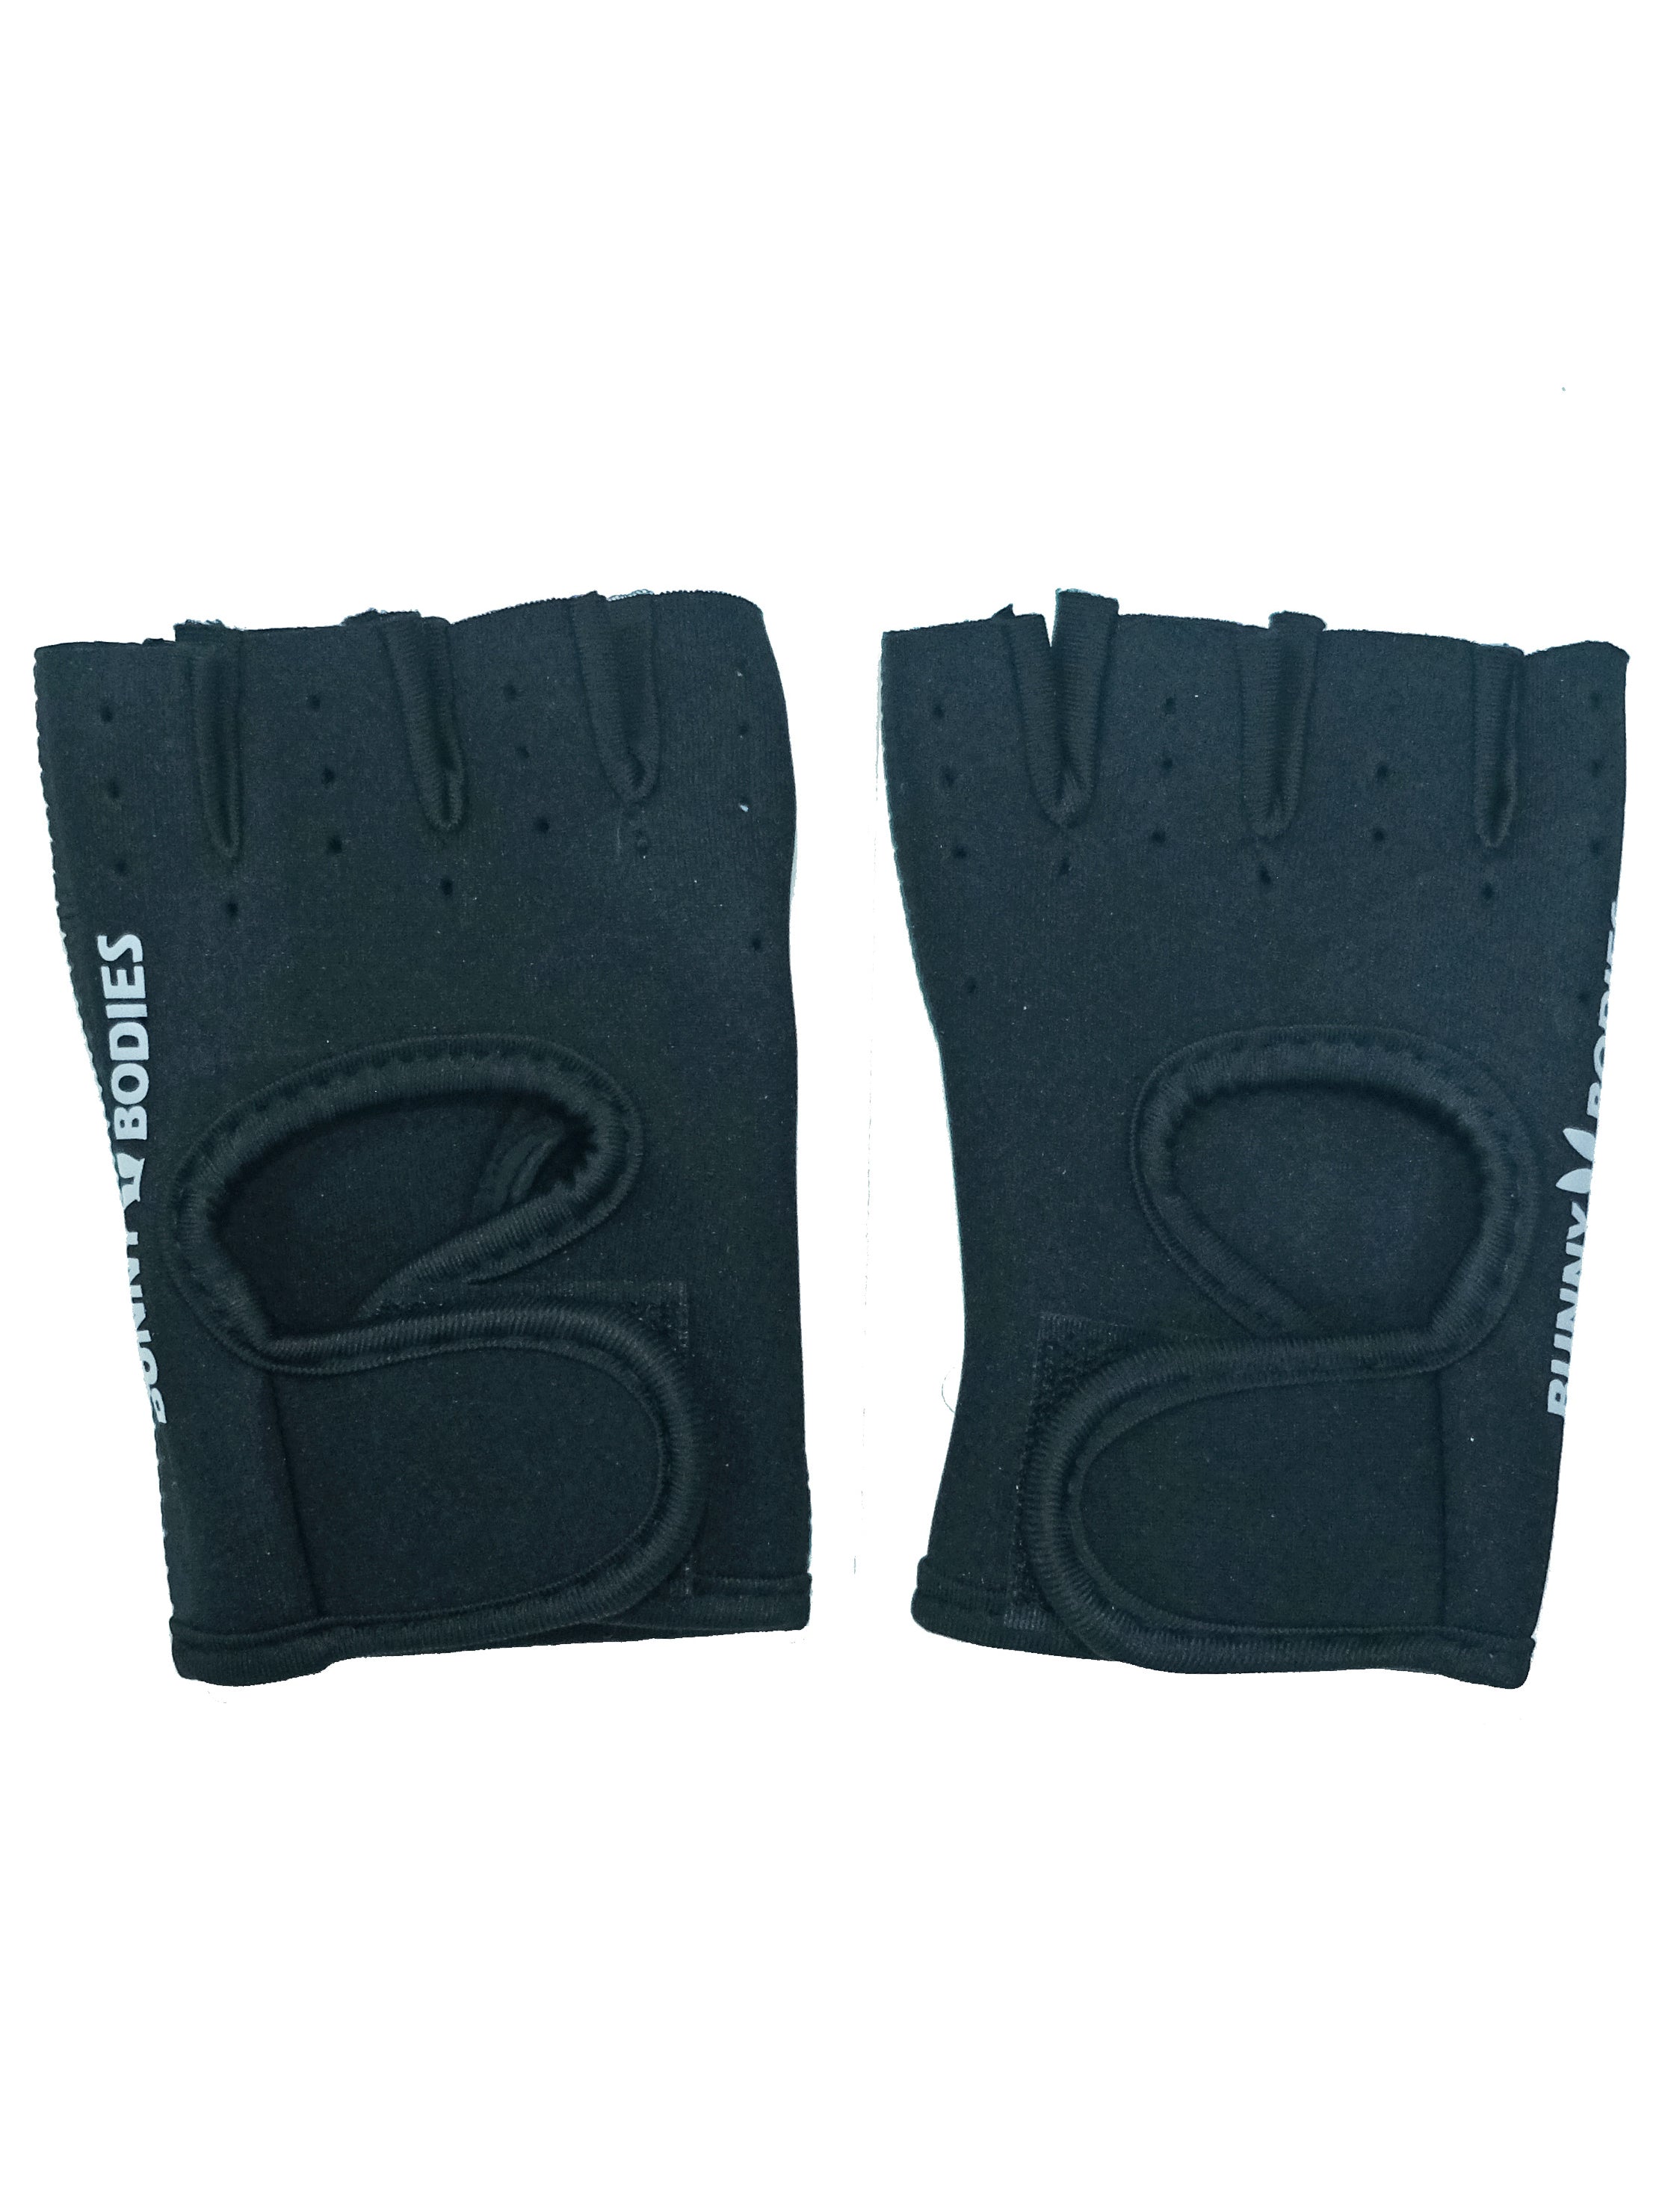 Gym Gloves ver. 2 - Black